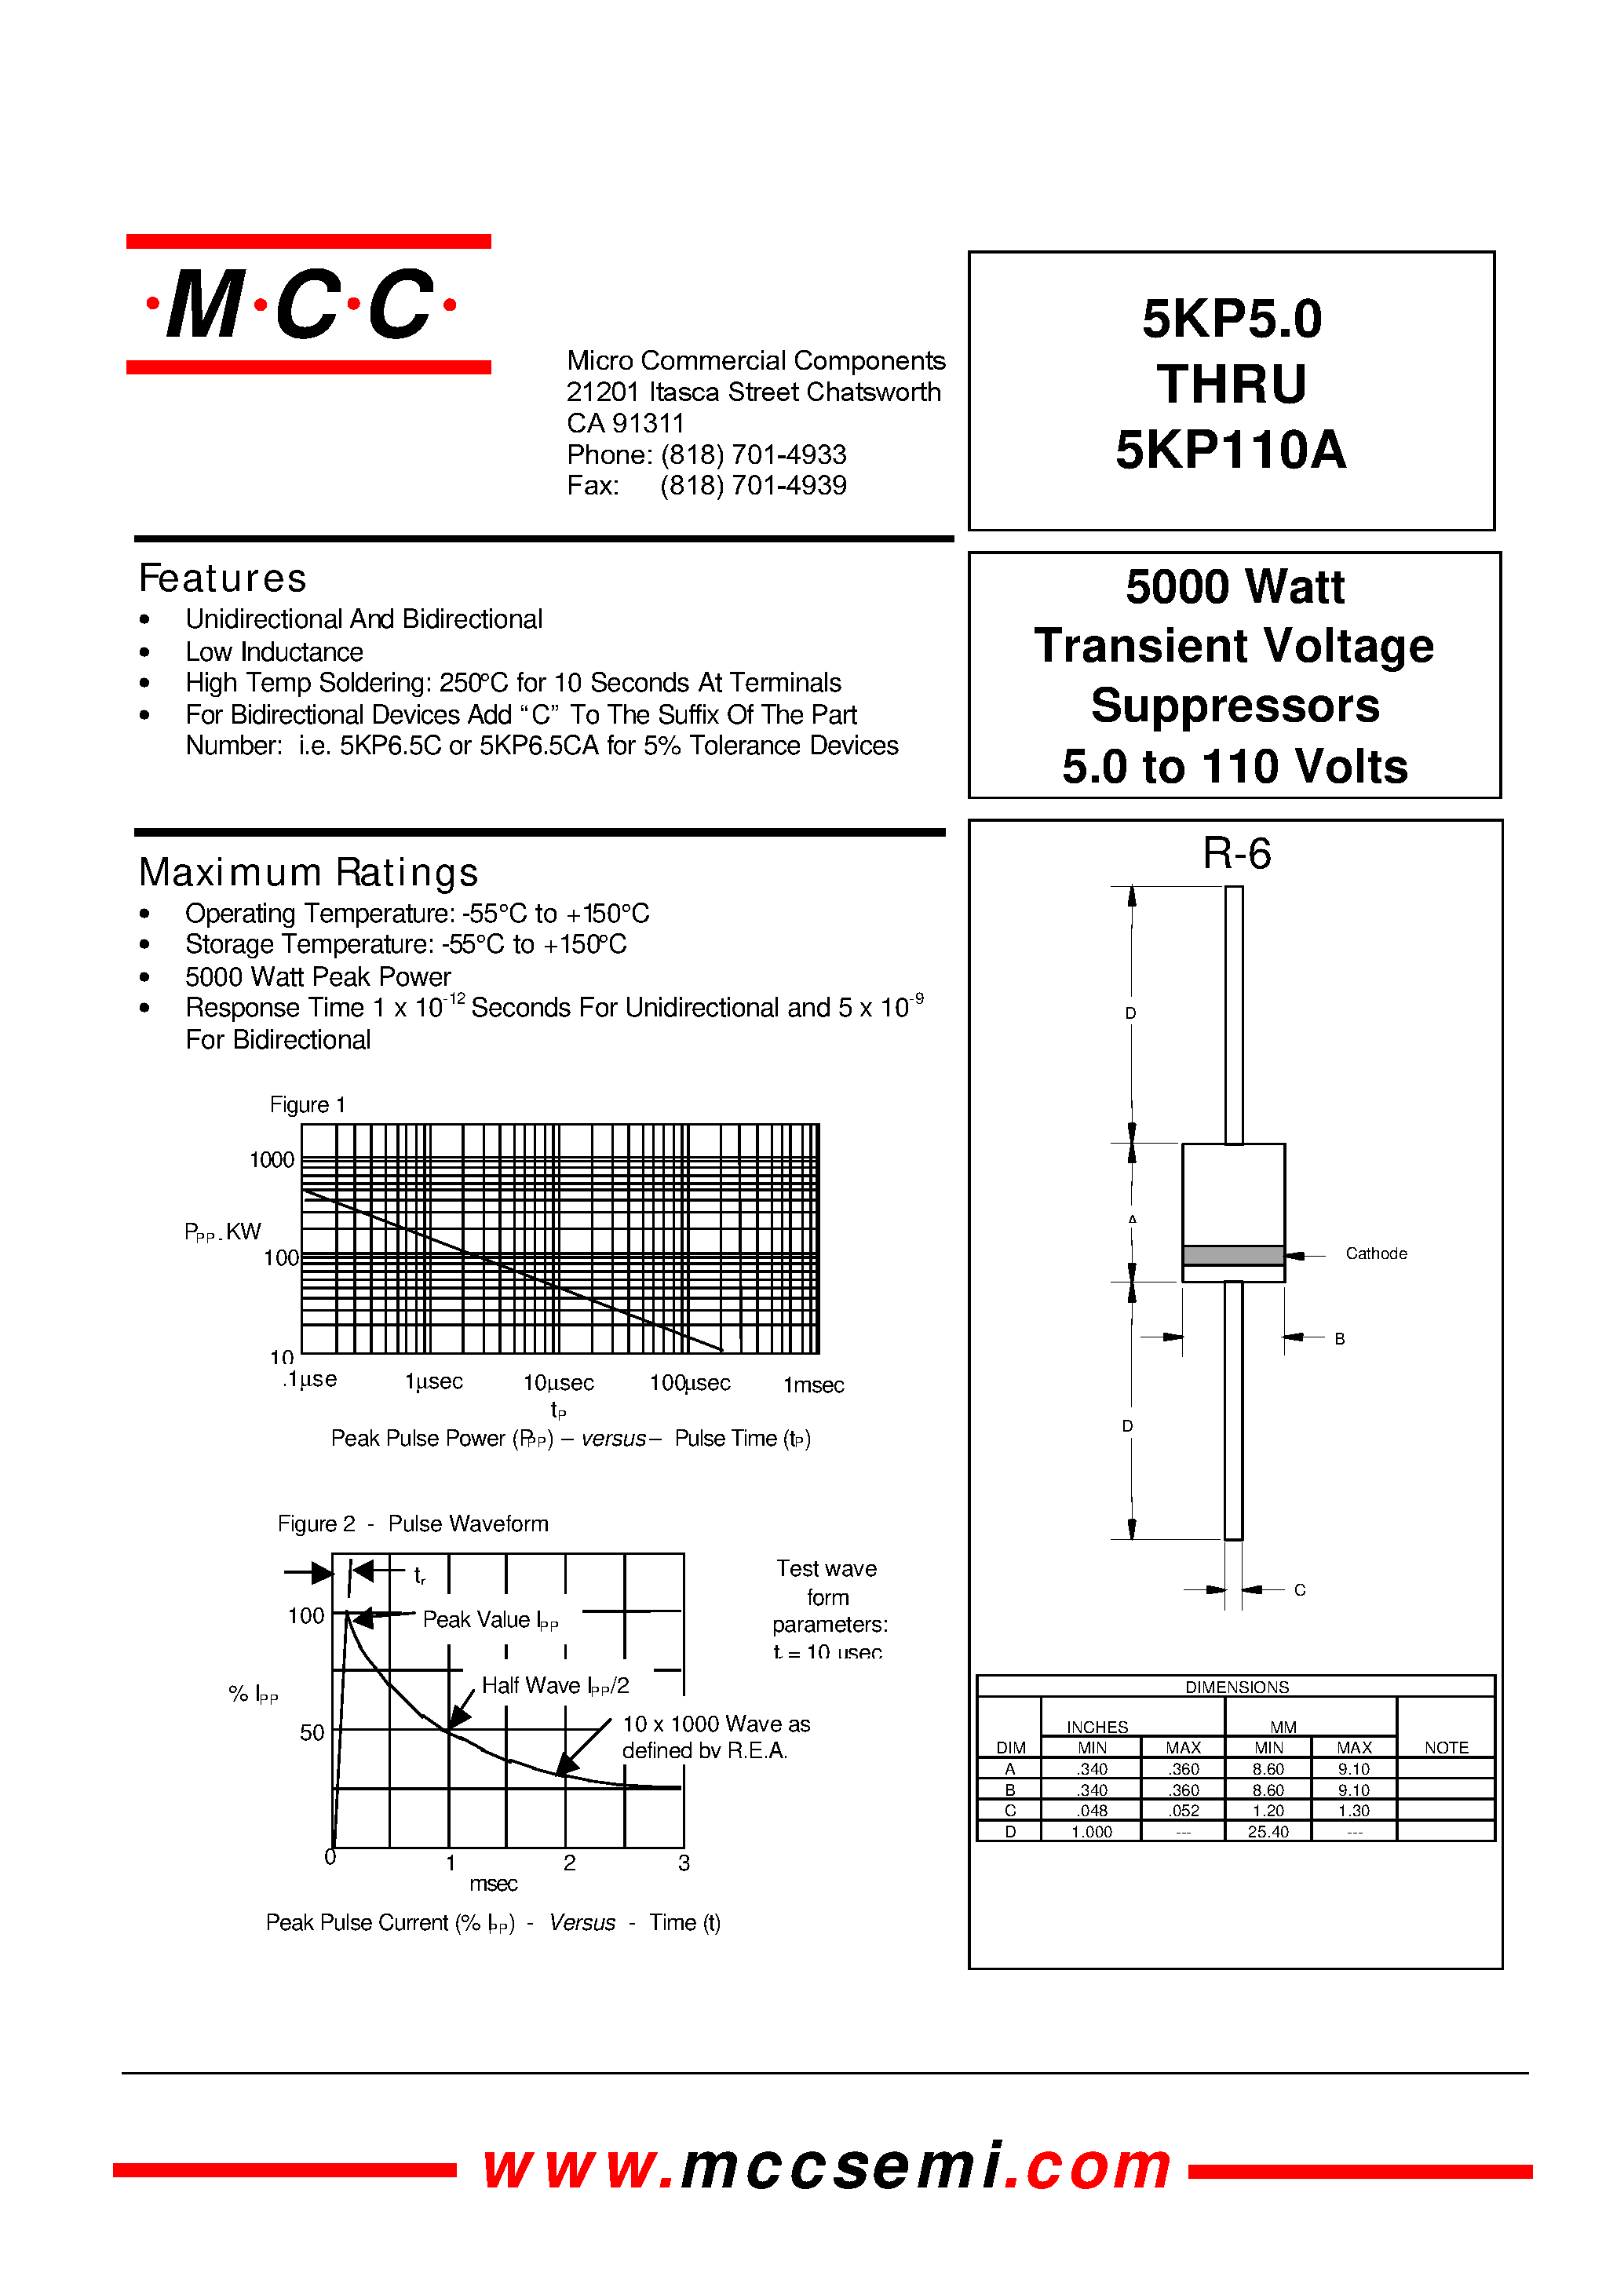 Даташит 5KP6.5 - 5000 Watt Transient Voltage Suppressors 5.0 to 110 Volts страница 1